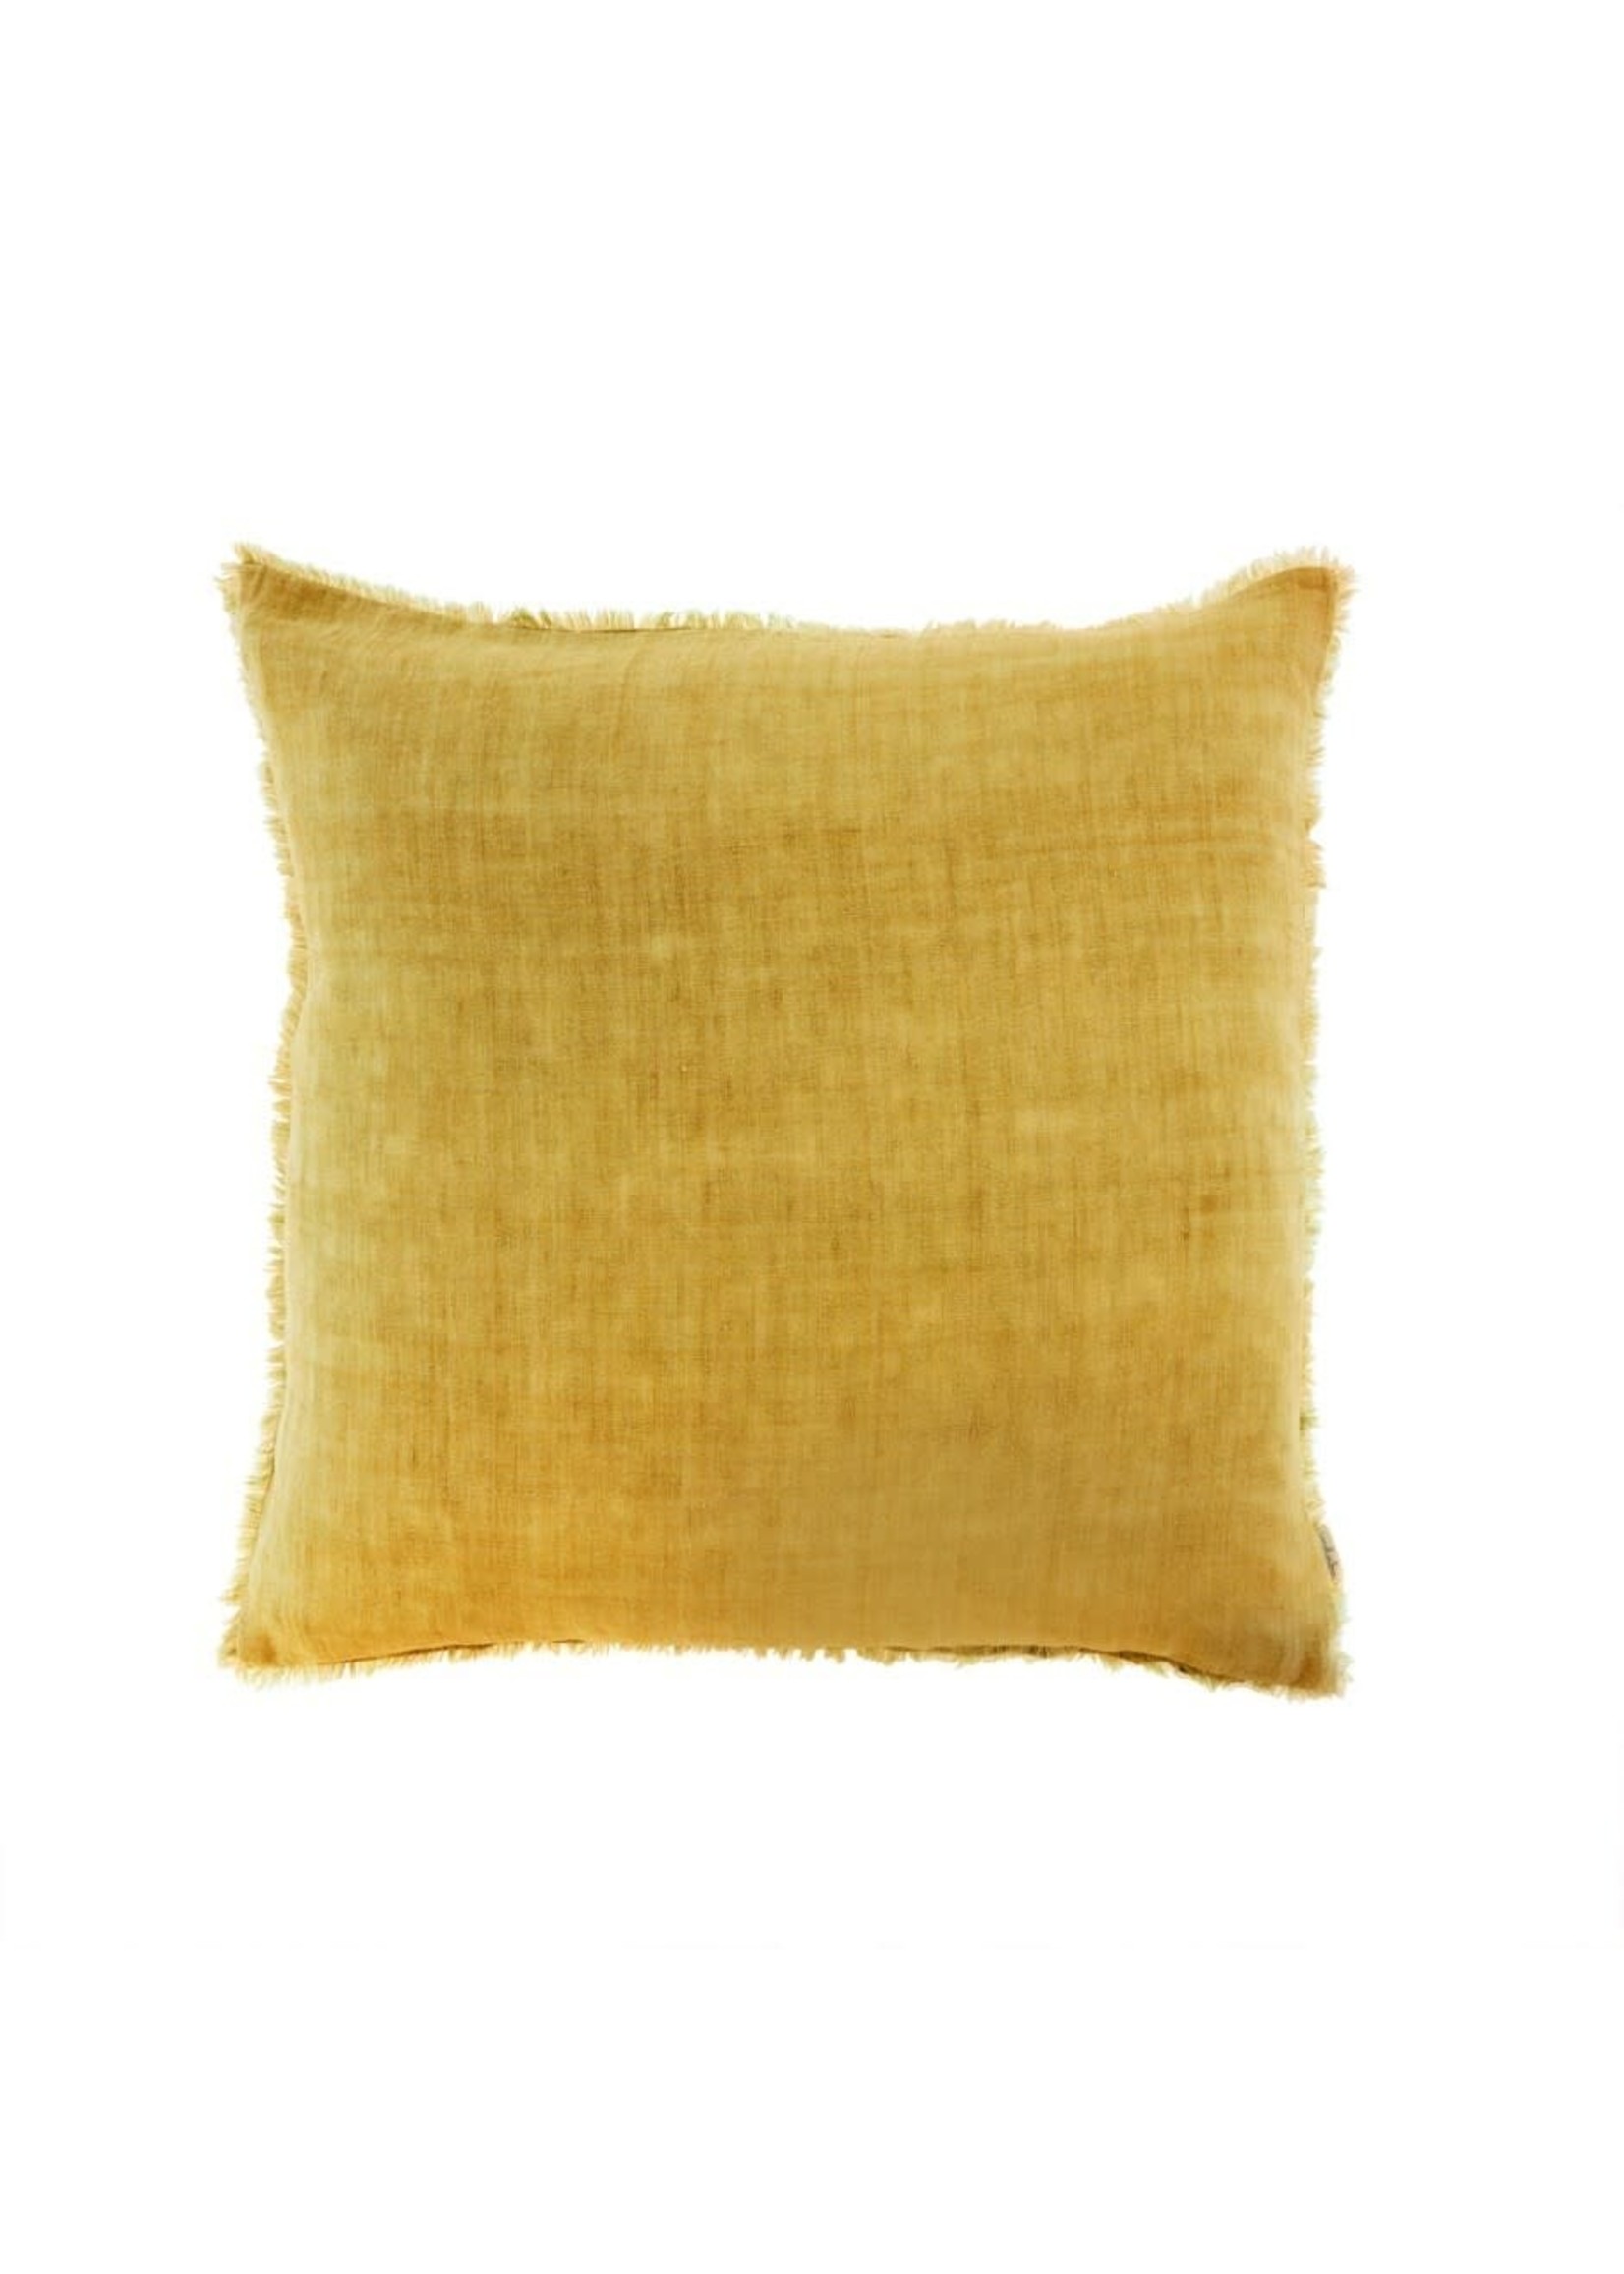 Indaba Indaba Lina Linen Throw Pillow, Chamomile, 24x24